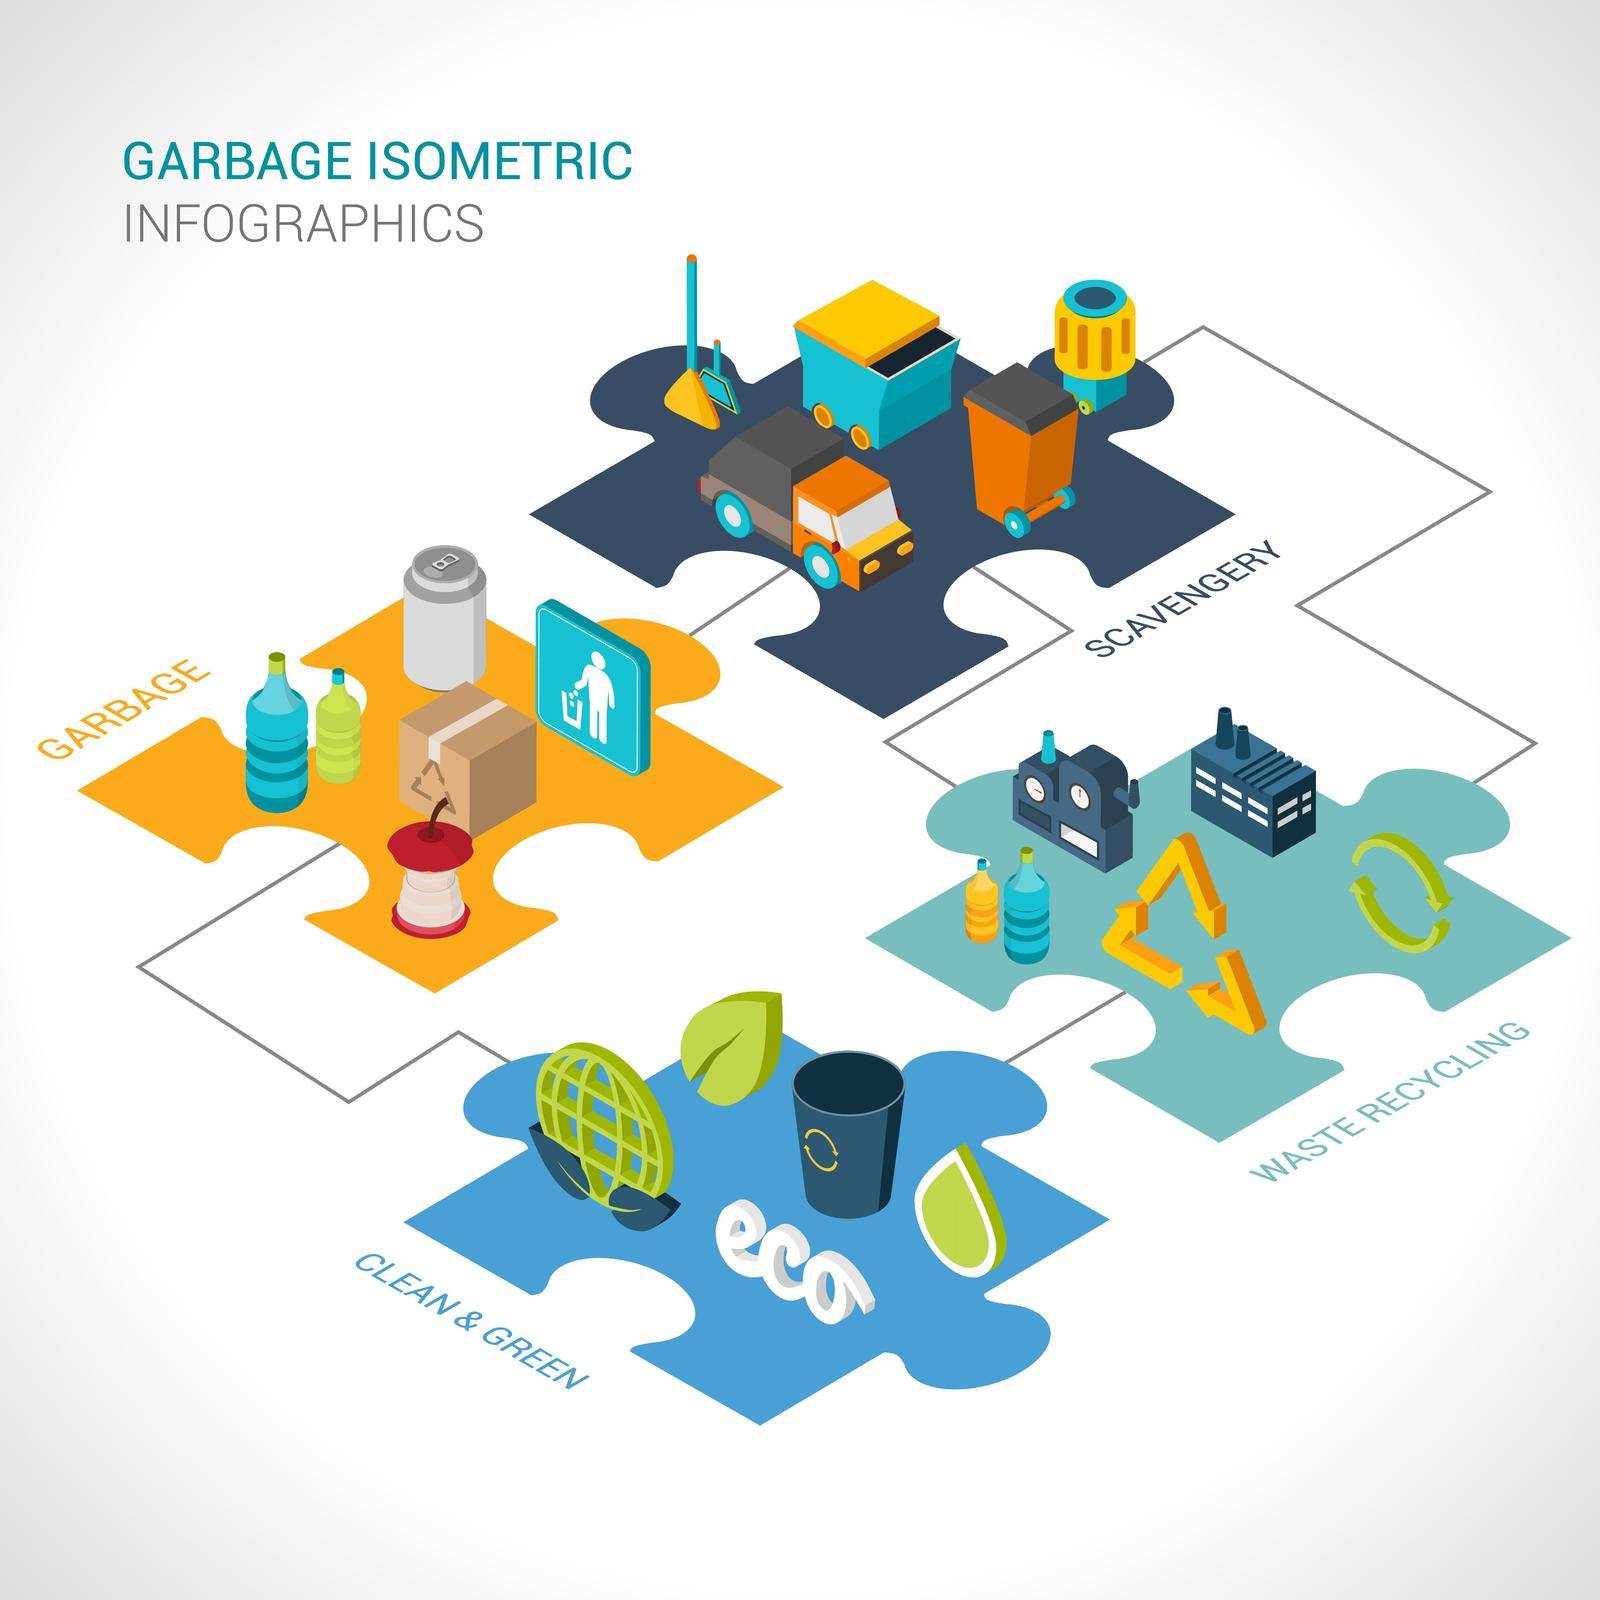 Garbage Isometric Infographics by mstjahanara